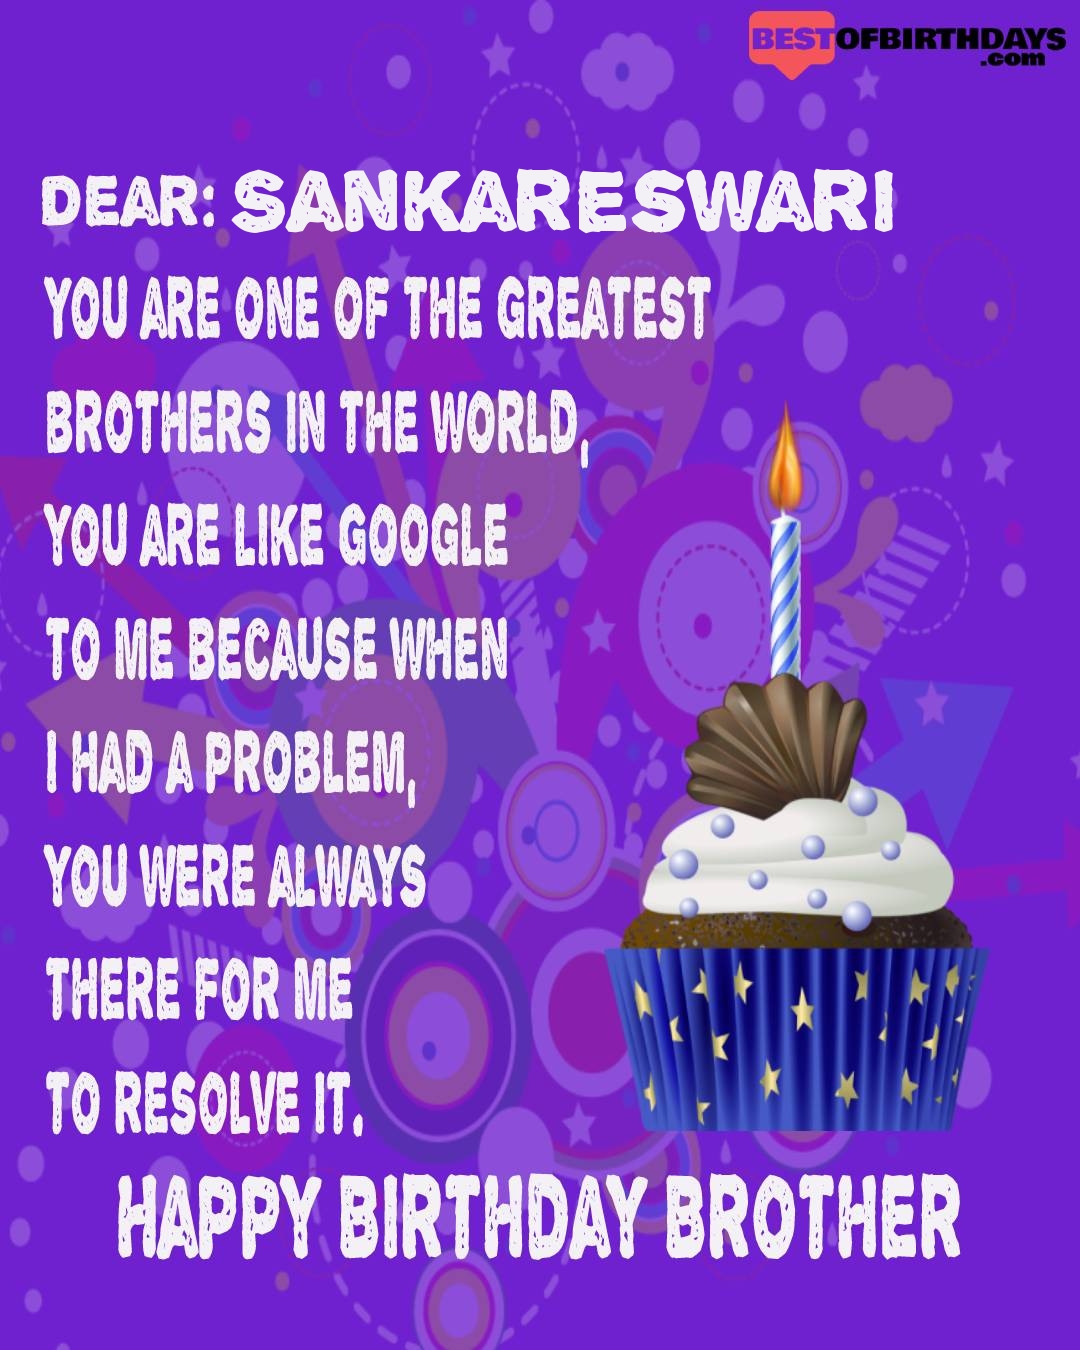 Happy birthday sankareswari bhai brother bro